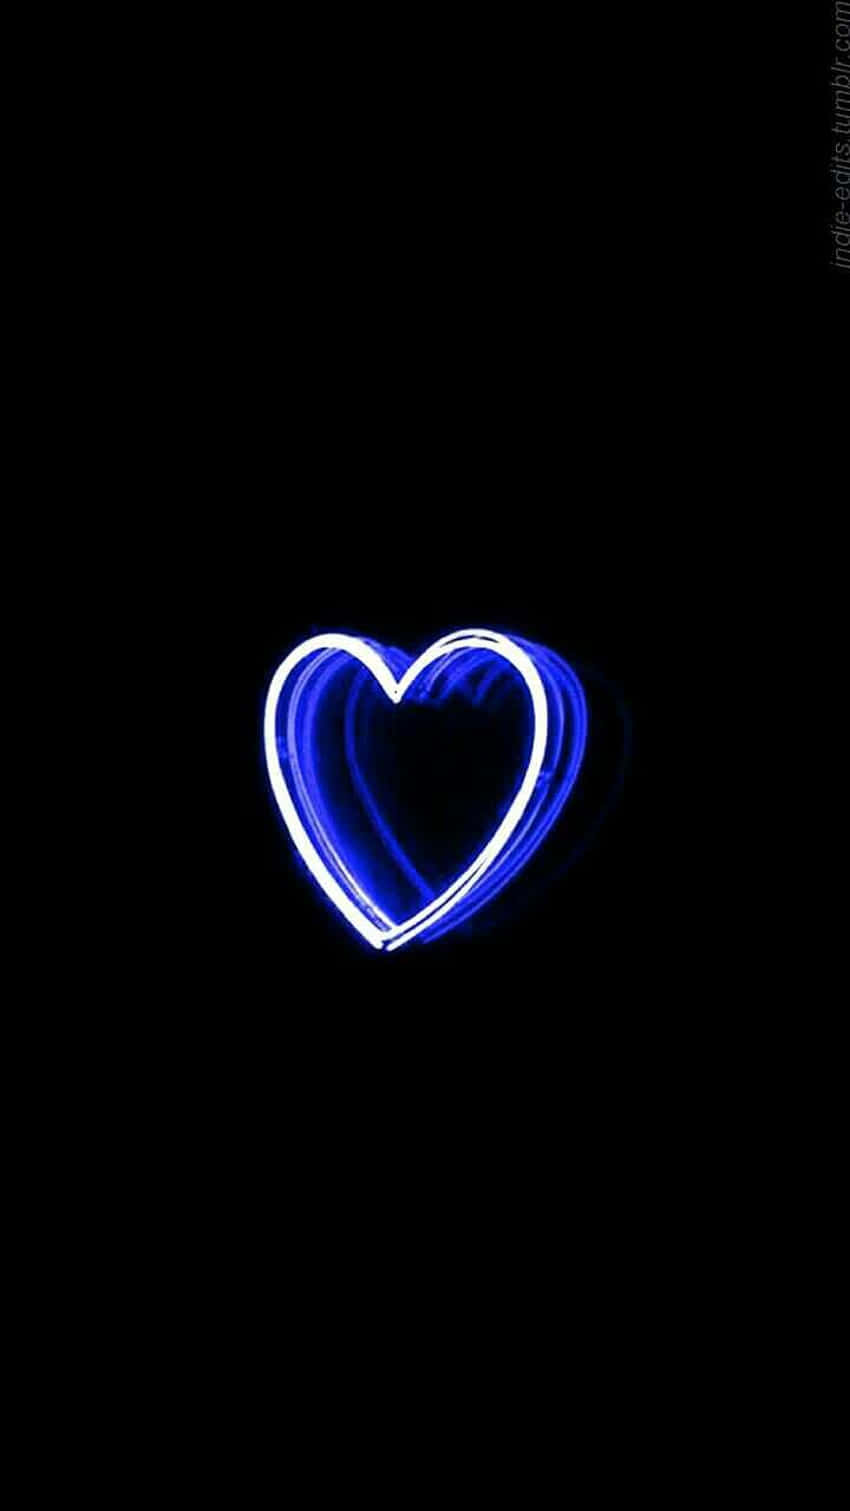 A Blue Heart Drawn On A Black Background